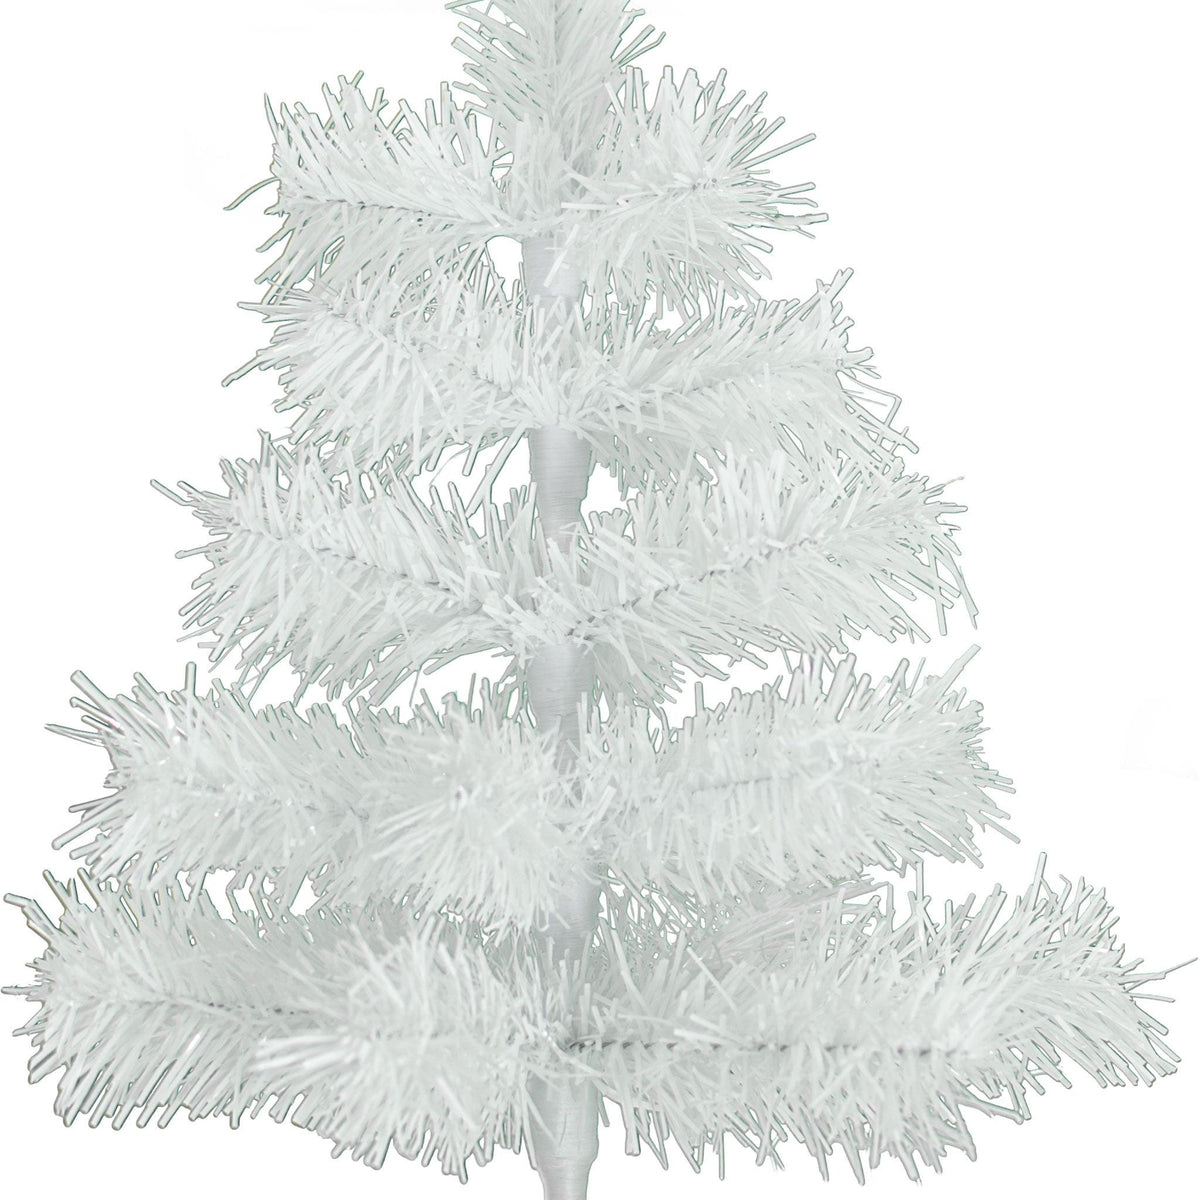 Lee Display's 18in White Tinsel Christmas Tree sold at leedisplay.com